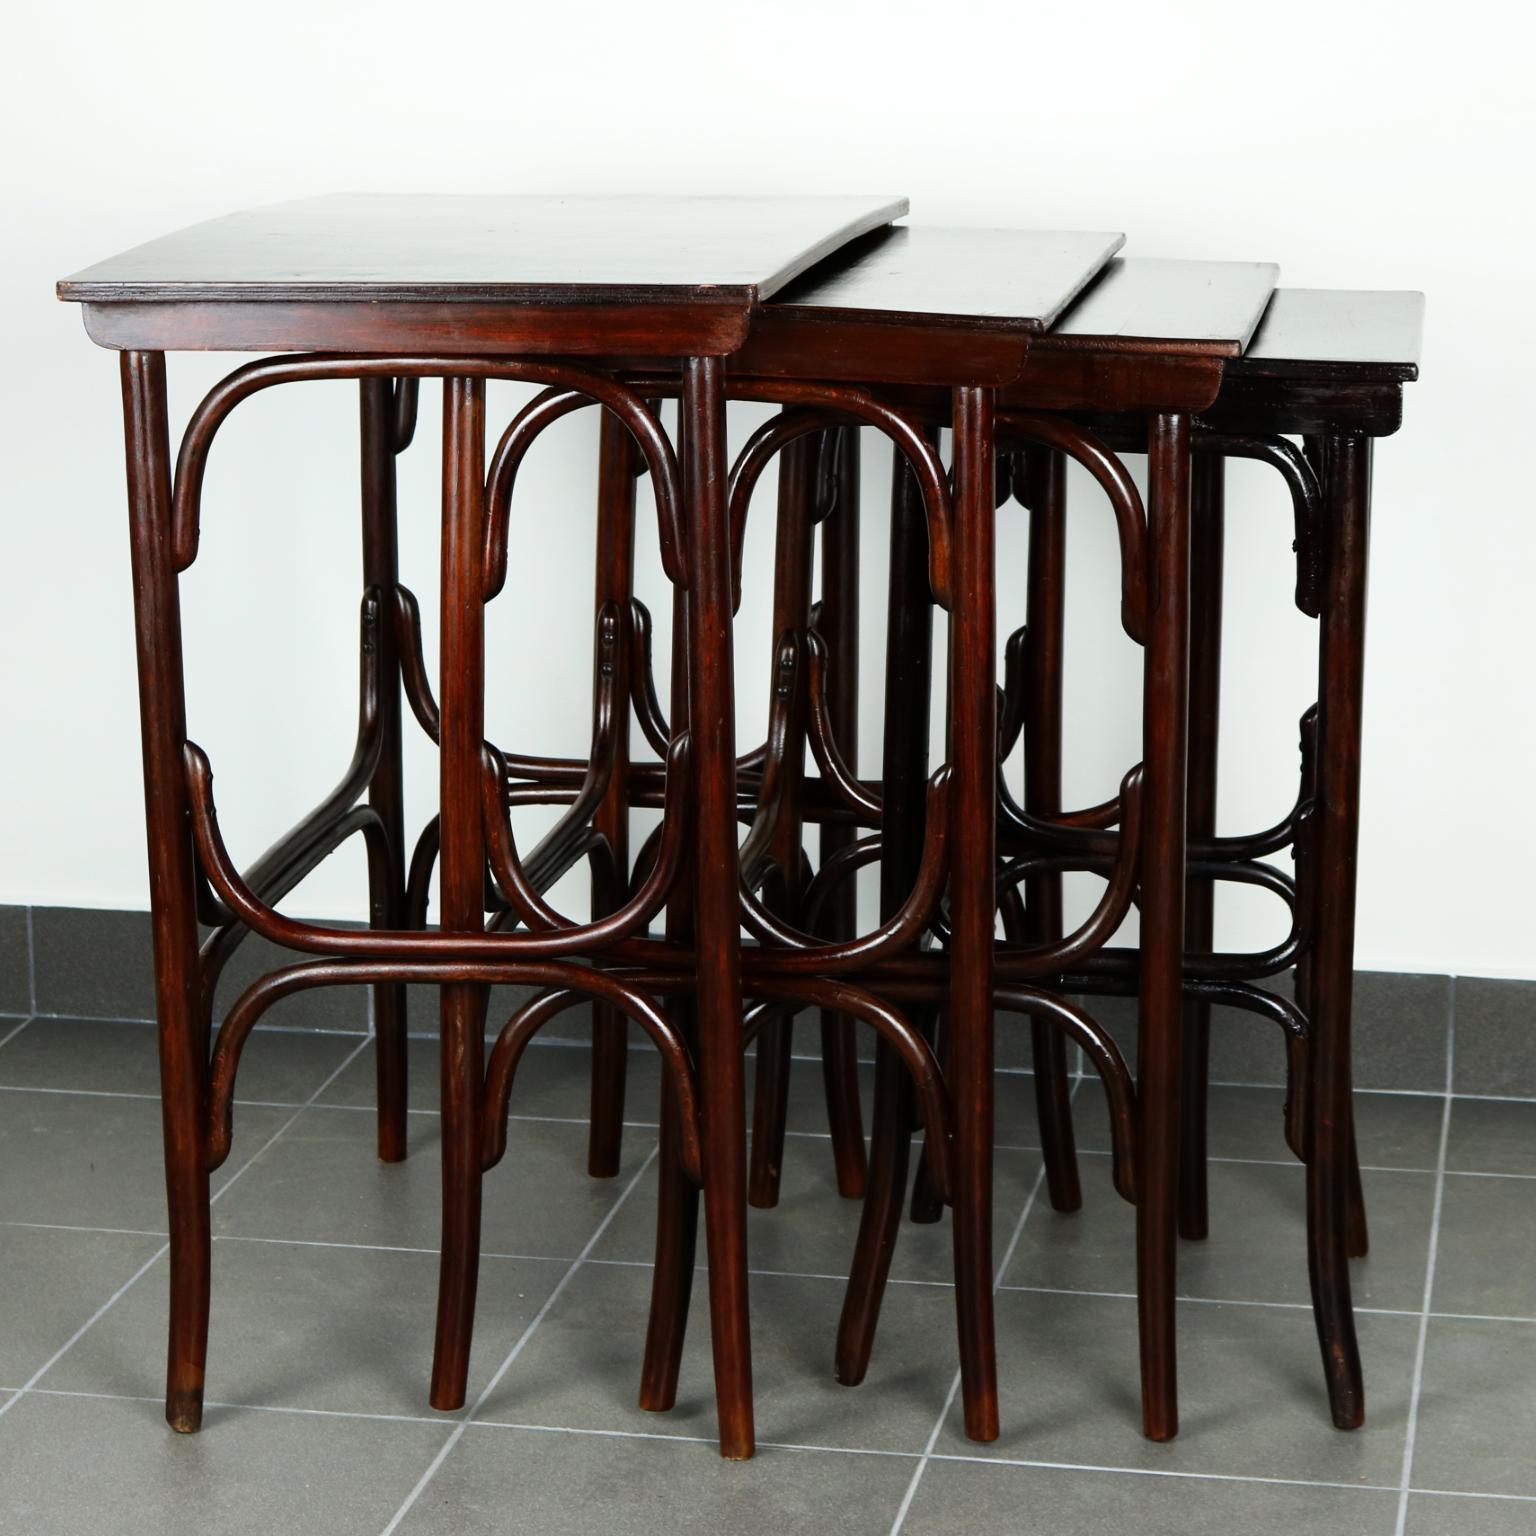 Set of 4 Art Nouveau nesting tables or Quartetto tables by Thonet Wien, model no. 10, circa 1905.
 